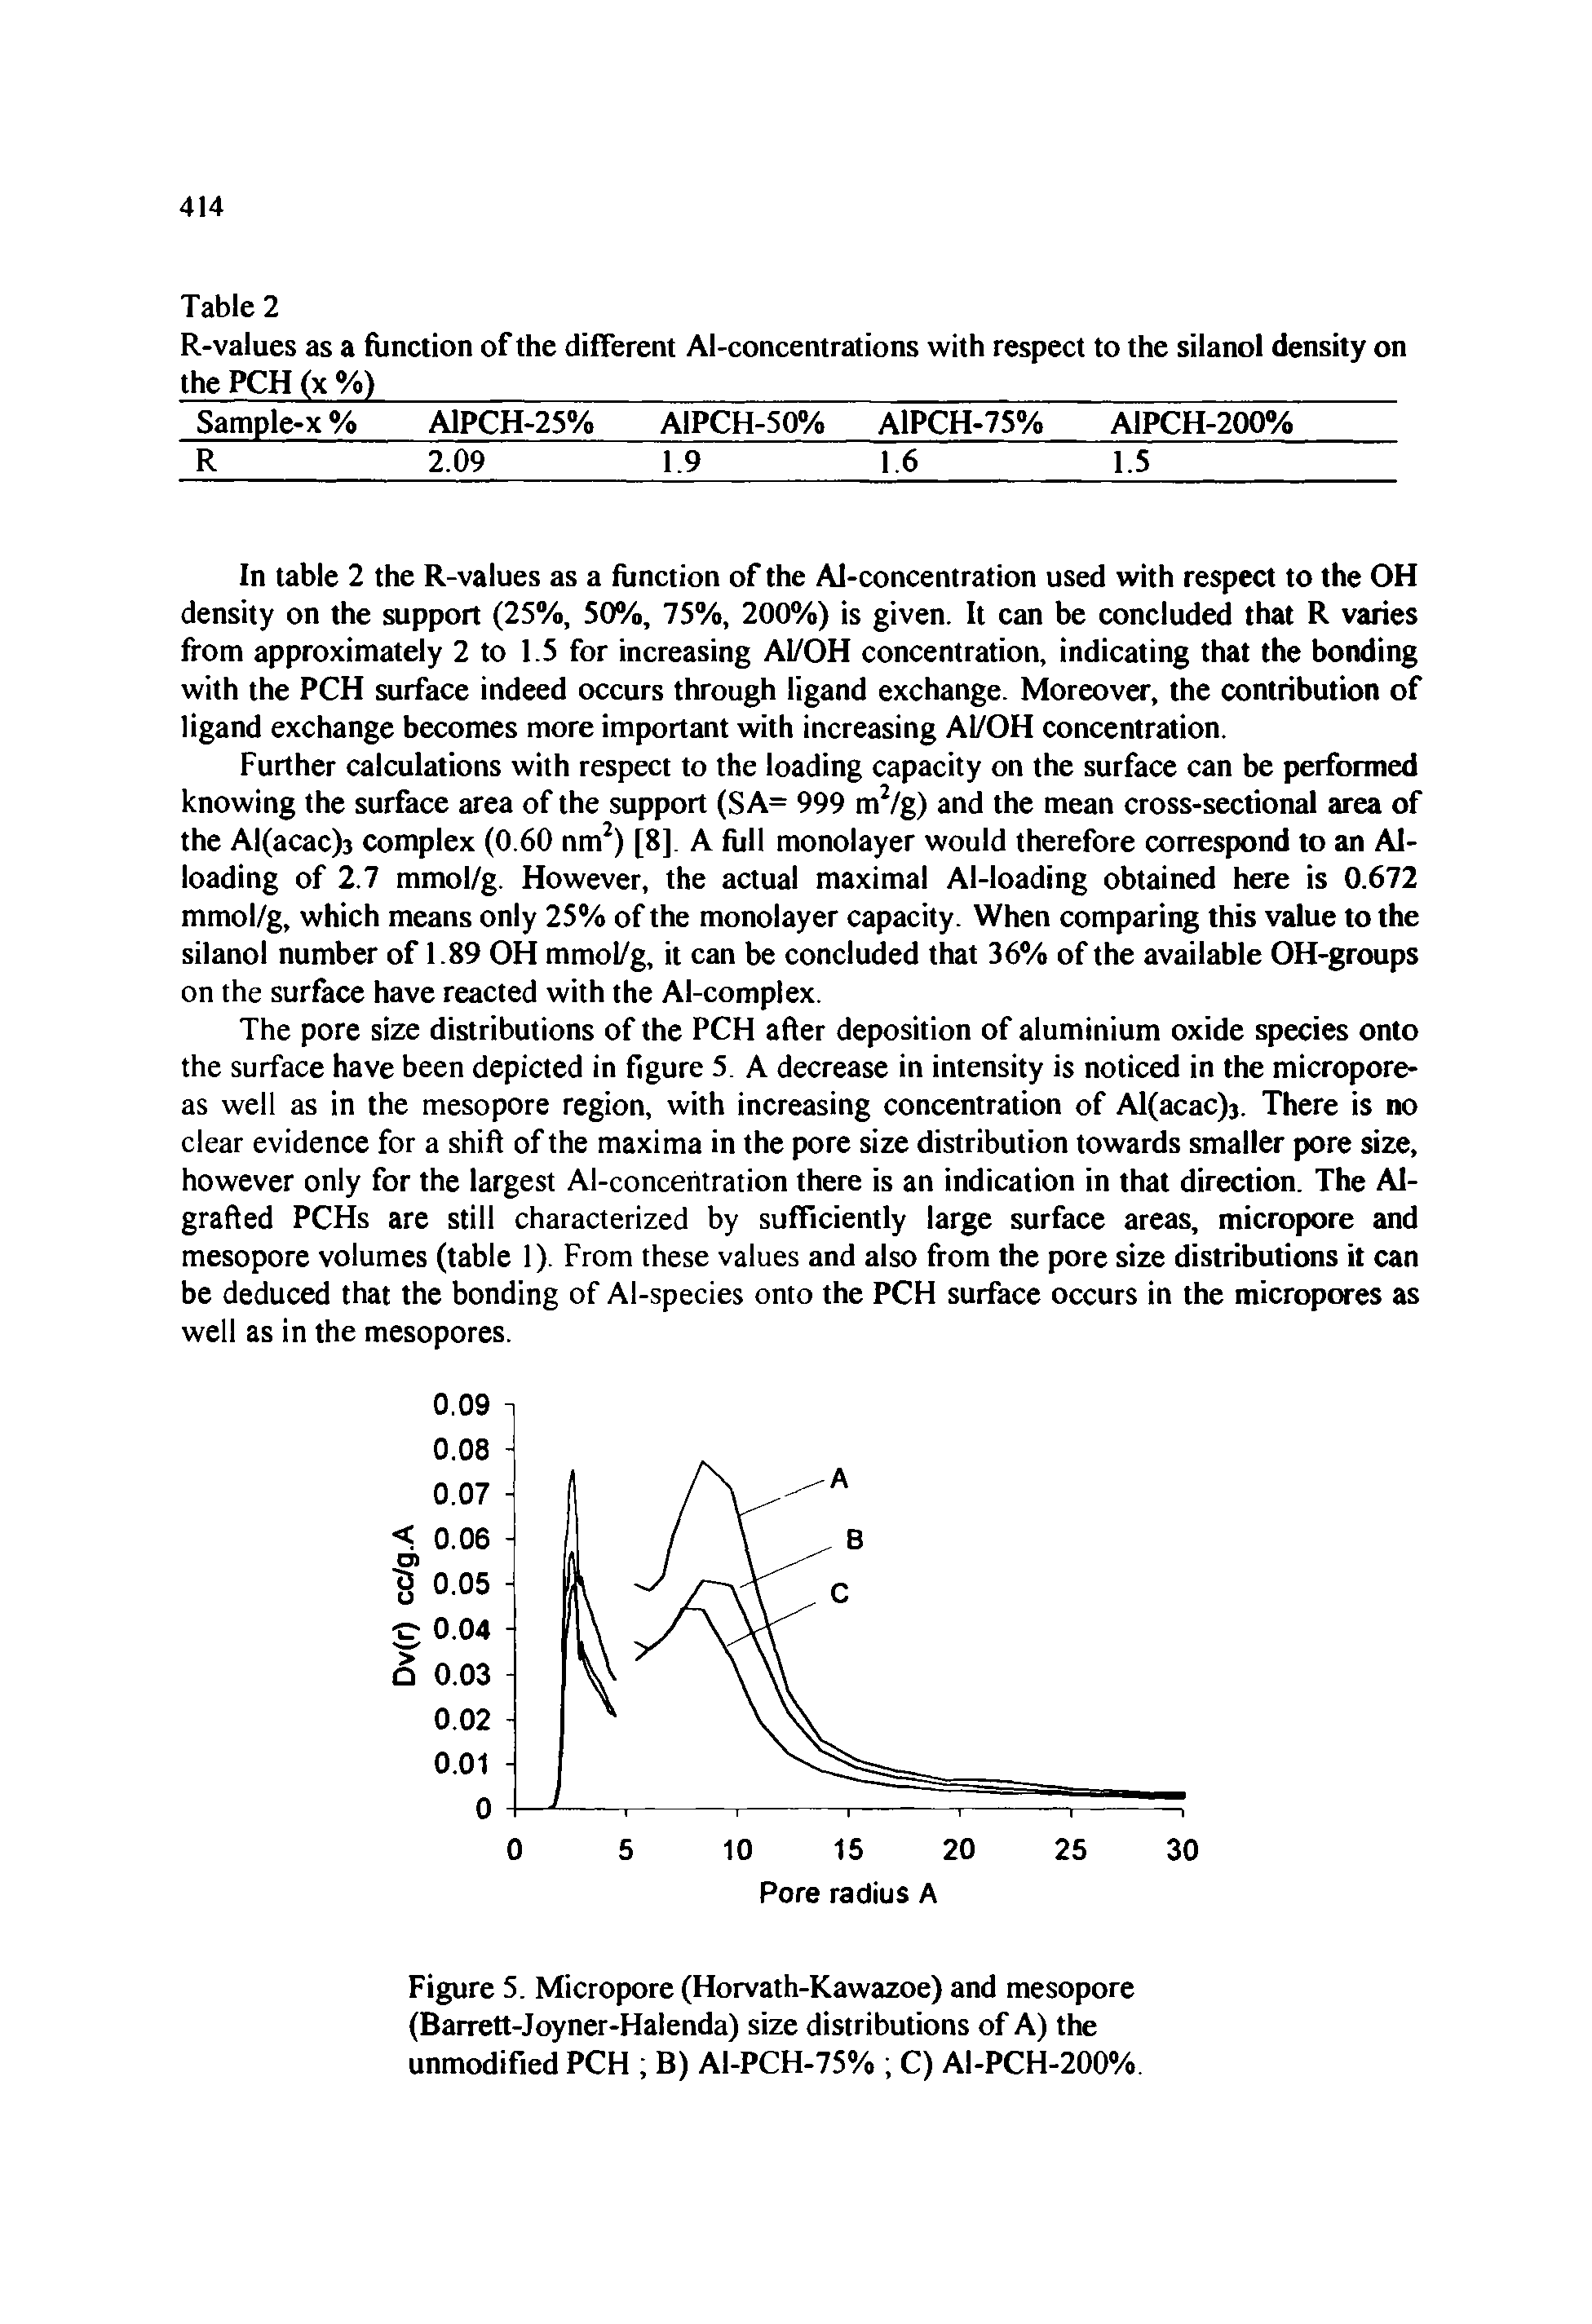 Figure 5. Micropore (Horvath-Kawazoe) and mesopore (Barrett-Joyner-Halenda) size distributions of A) the unmodified PCH B) Al-PCH-75% C) AI-PCH-200%...